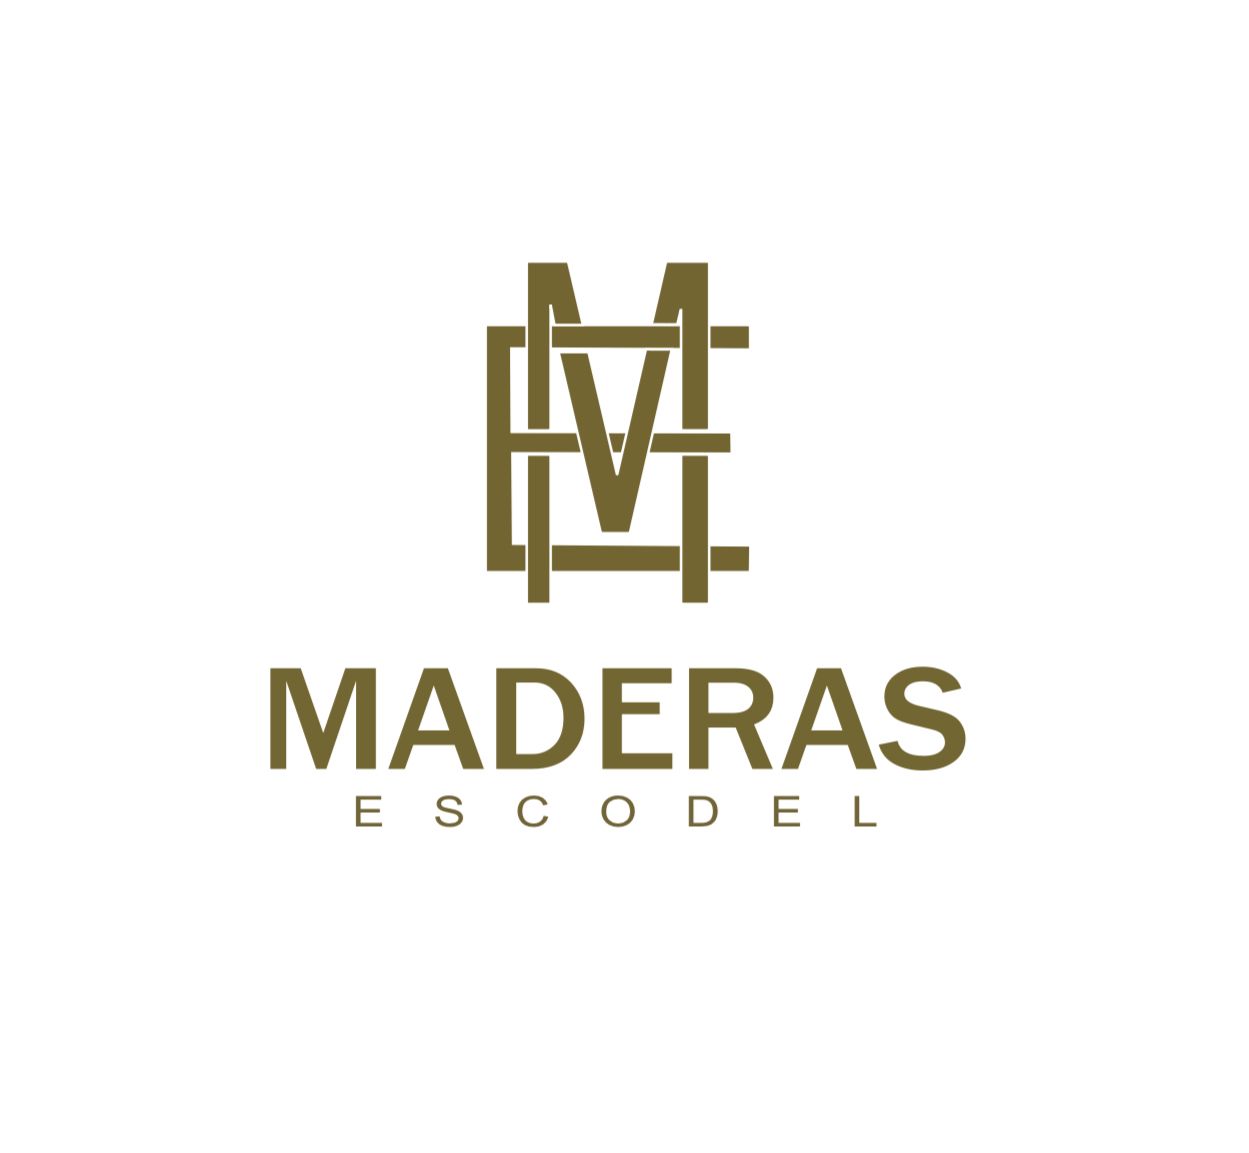 Maderas Escodel 